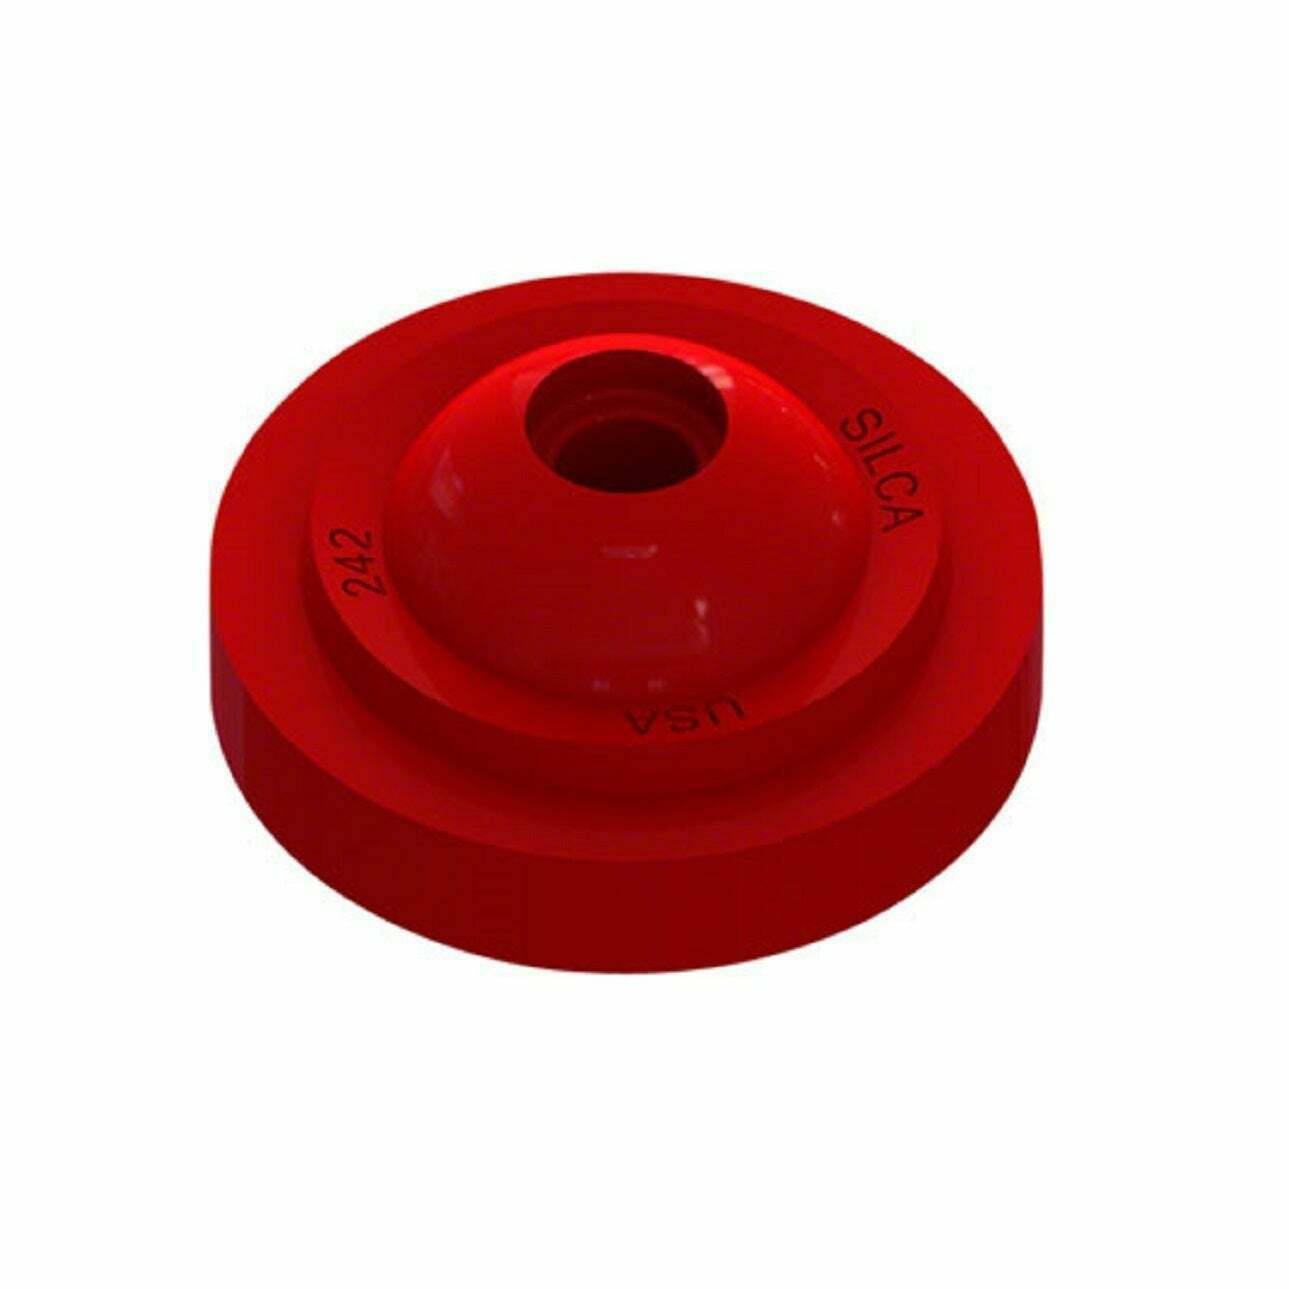 Silca Red Elastomer Seal for Chuck #242 Fits 24.0 Head & Presta part of 30.0